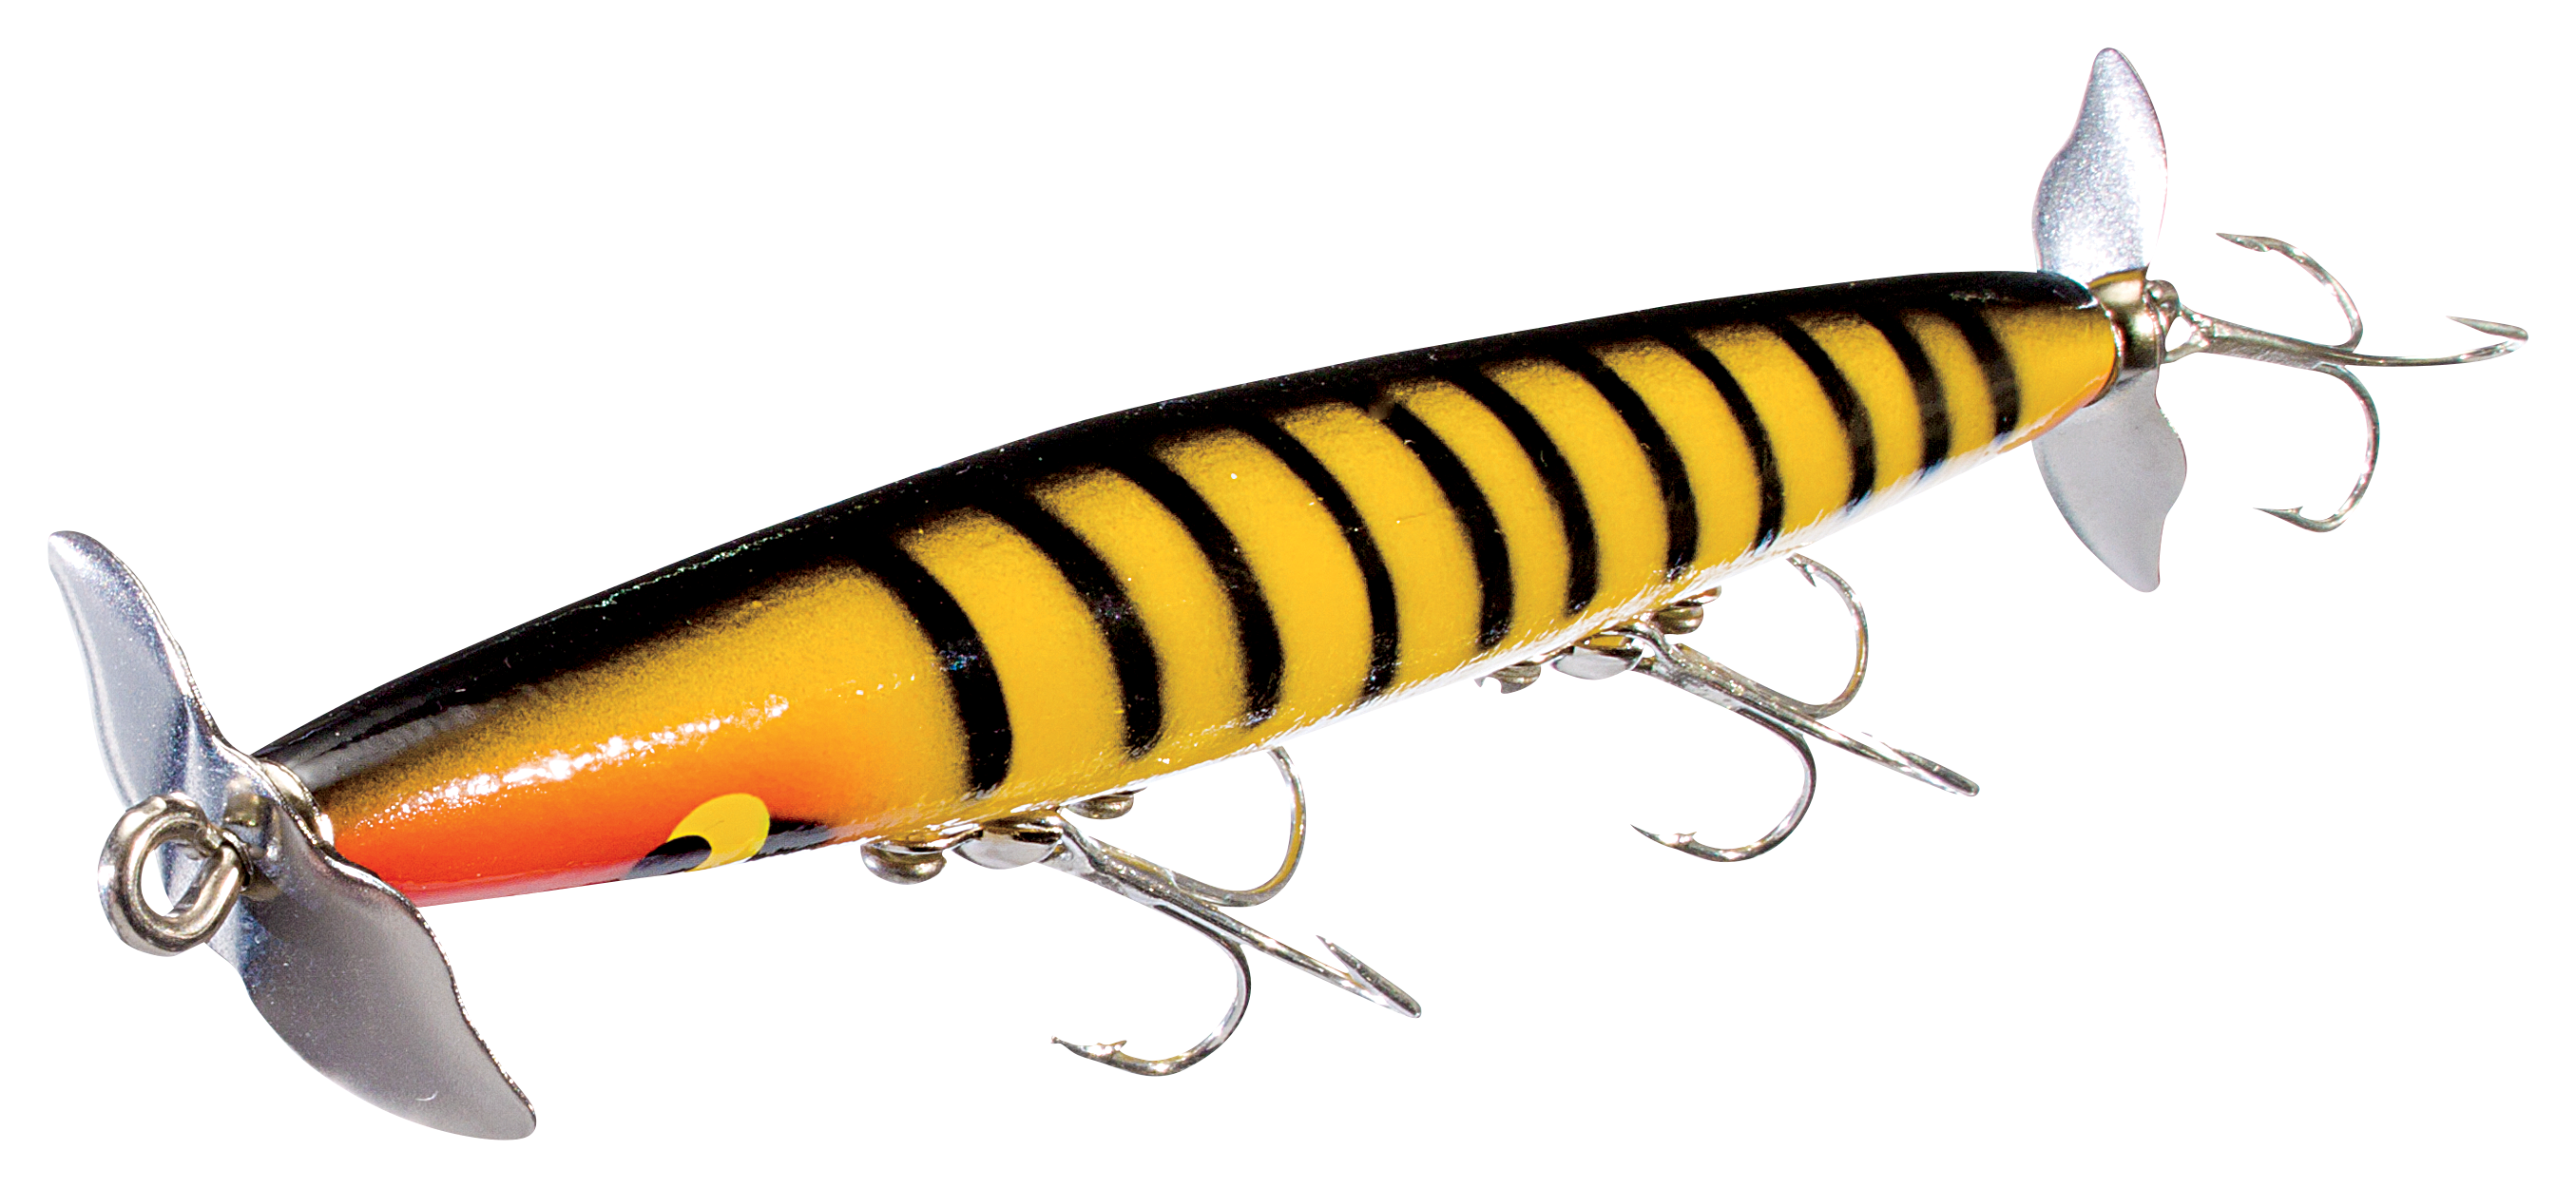 (11cm -30ml, Yellow/Black Striper) - Smithwick Lures Devils Horse Fishing Lure